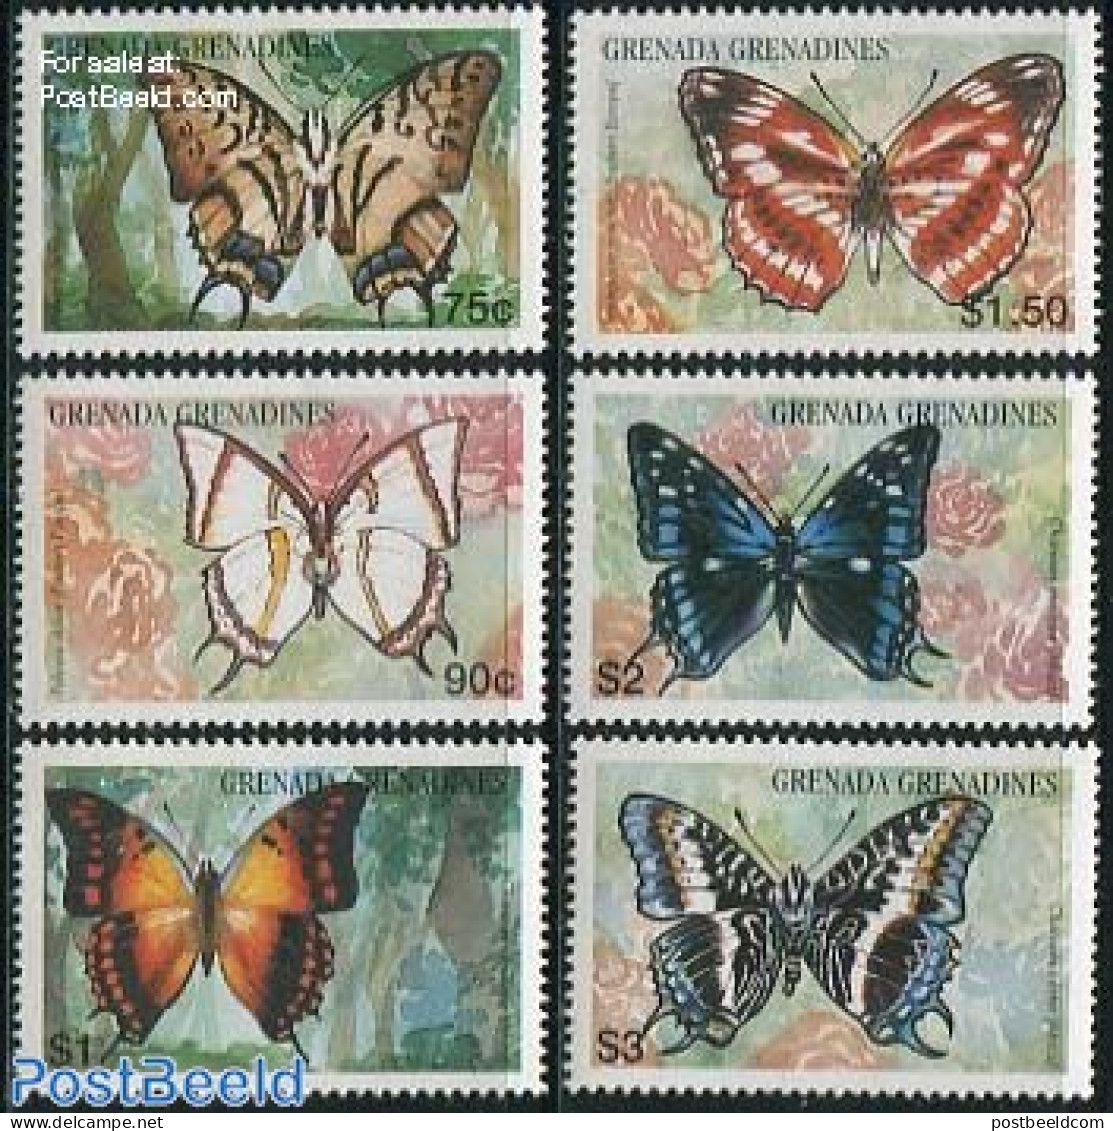 Grenada Grenadines 1997 Butterflies 6v, Mint NH, Nature - Butterflies - Grenade (1974-...)